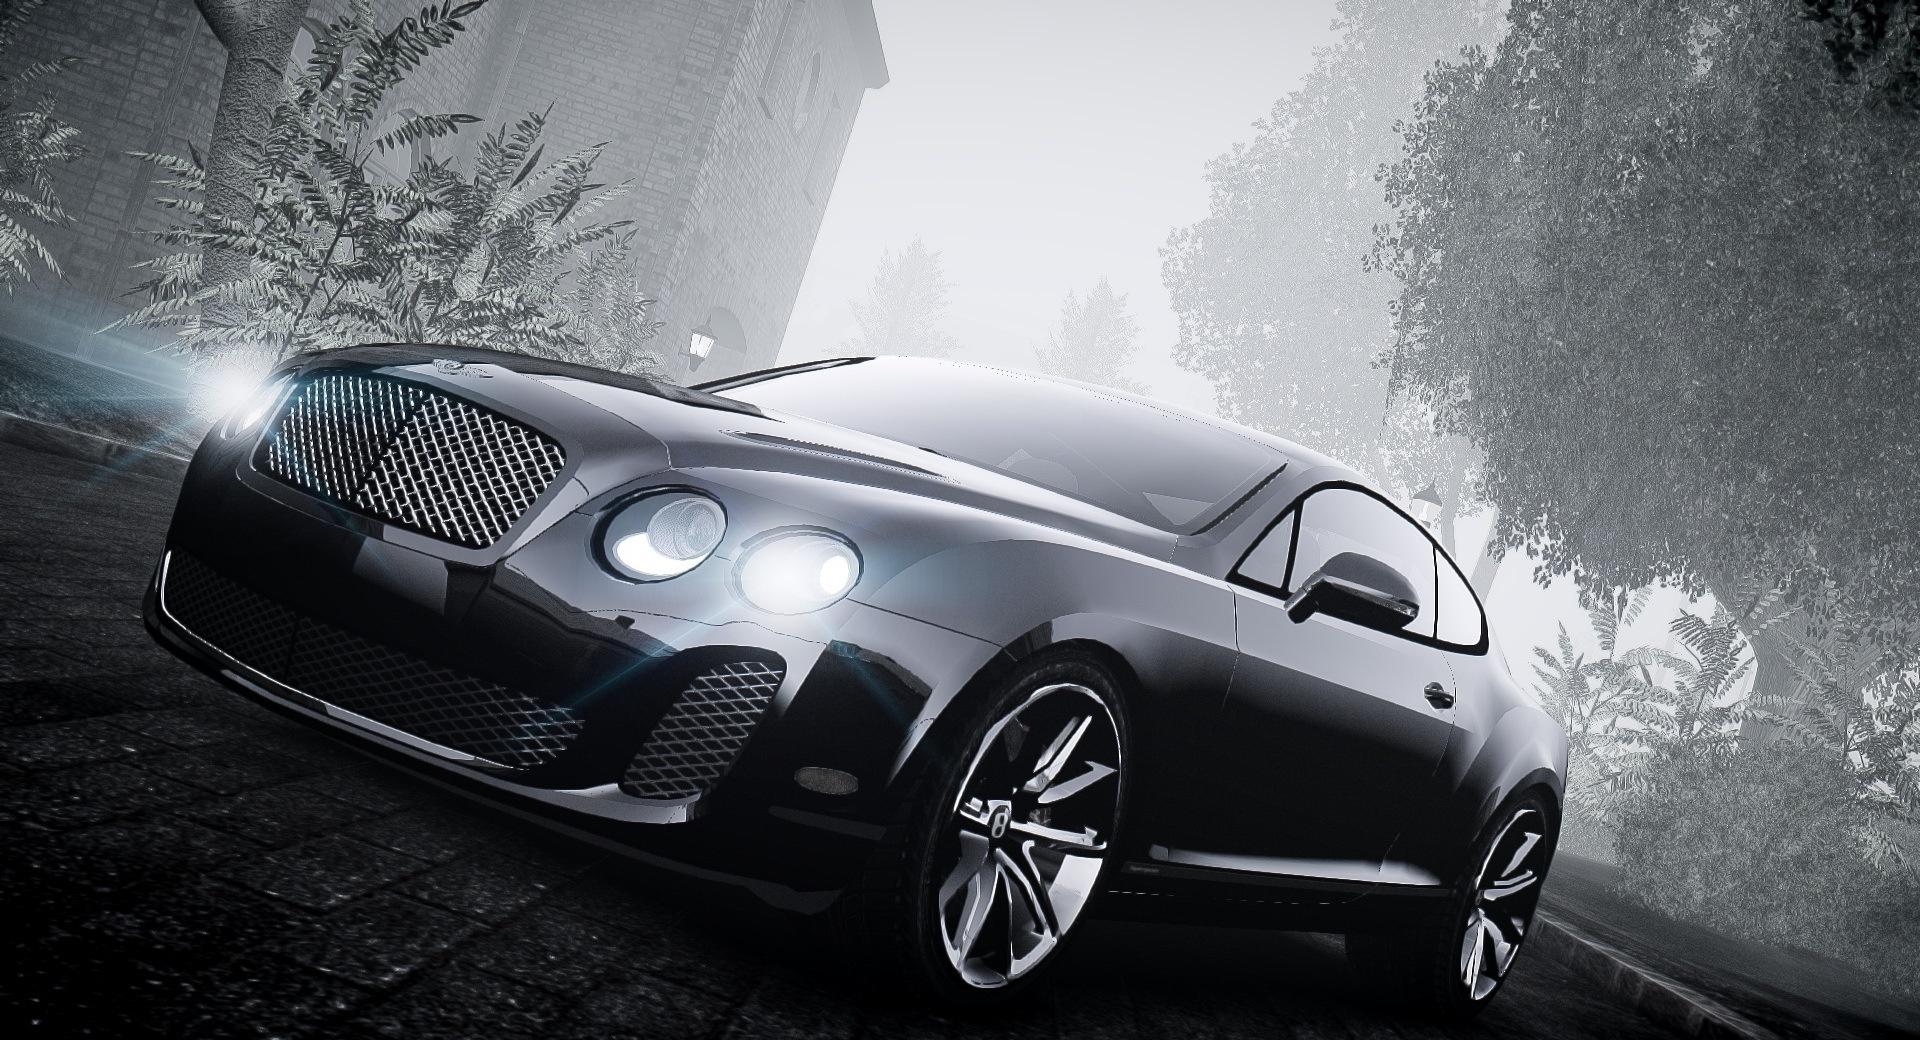 Bentley Video Game Screenshot wallpapers HD quality